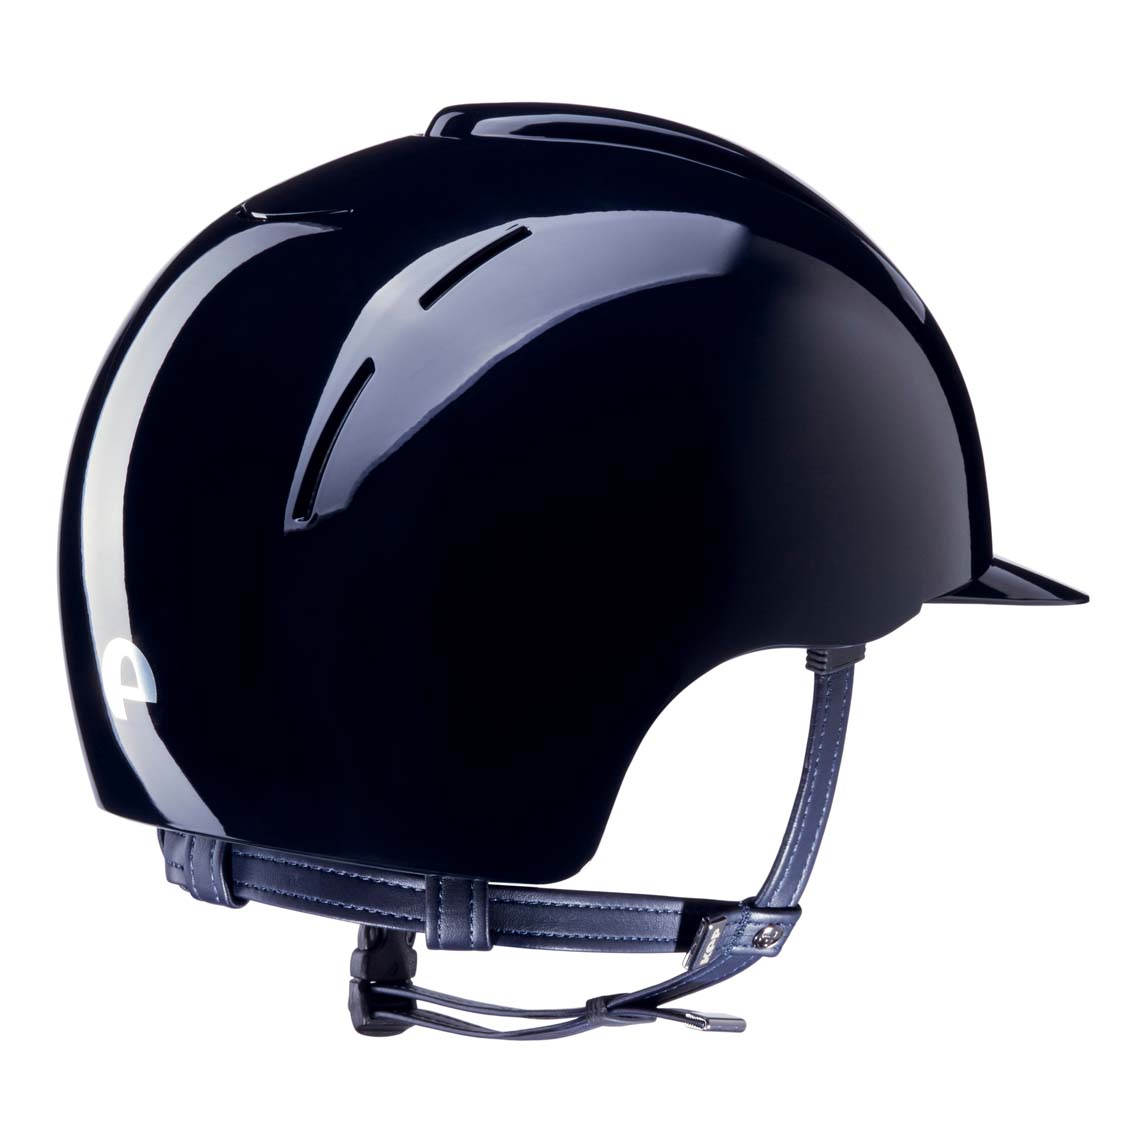 KEP Smart Riding Helmet - Polish Finish - Blue - Medium (52cm-58cm)